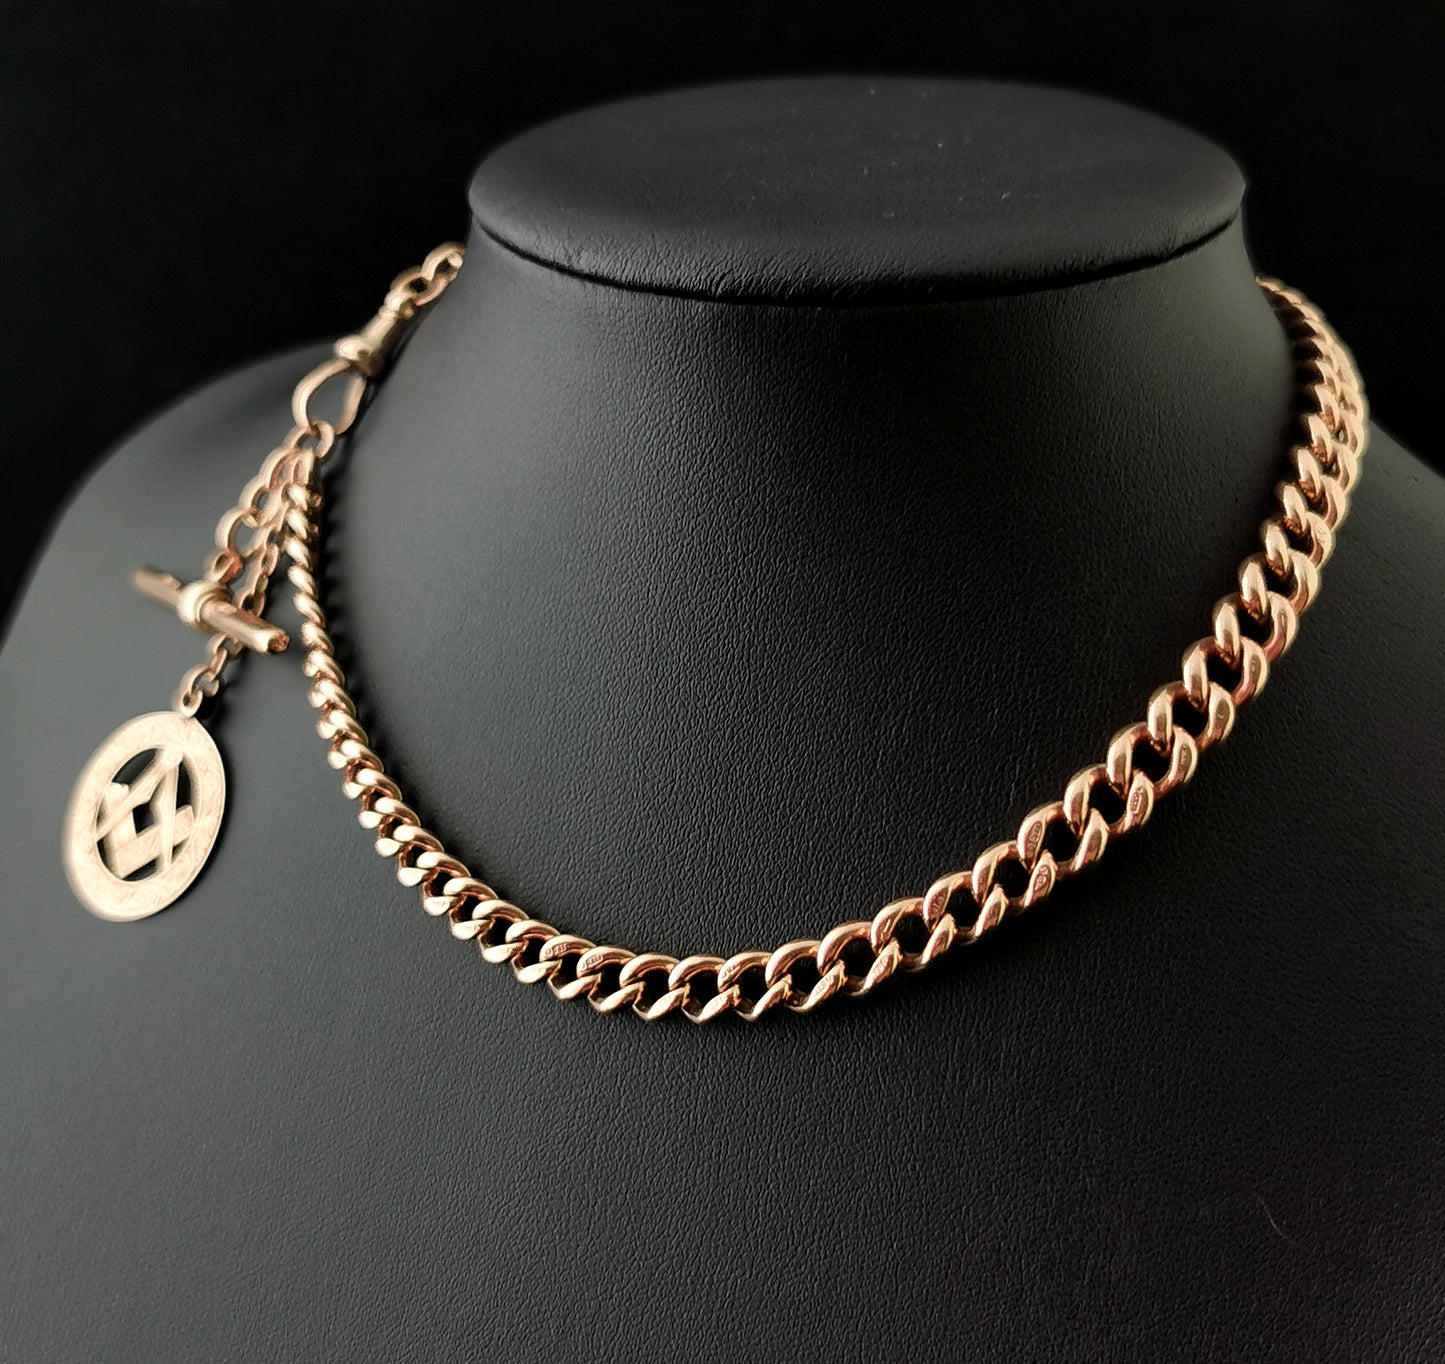 Antique 9ct Rose gold Albert chain, watch chain, Masonic fob